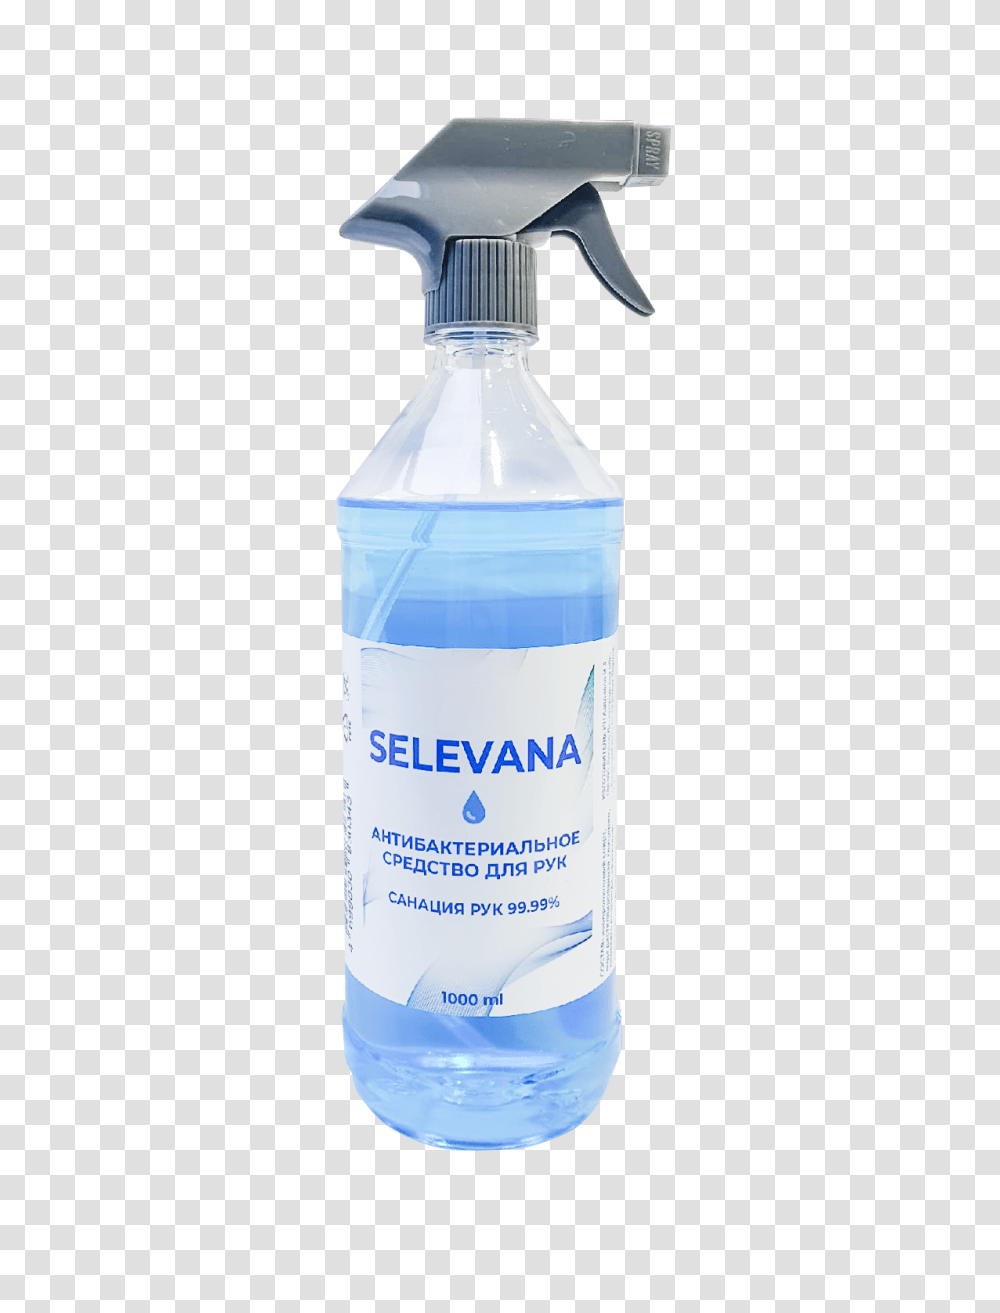 Antiseptic, Bottle, Shaker, Shampoo, Label Transparent Png